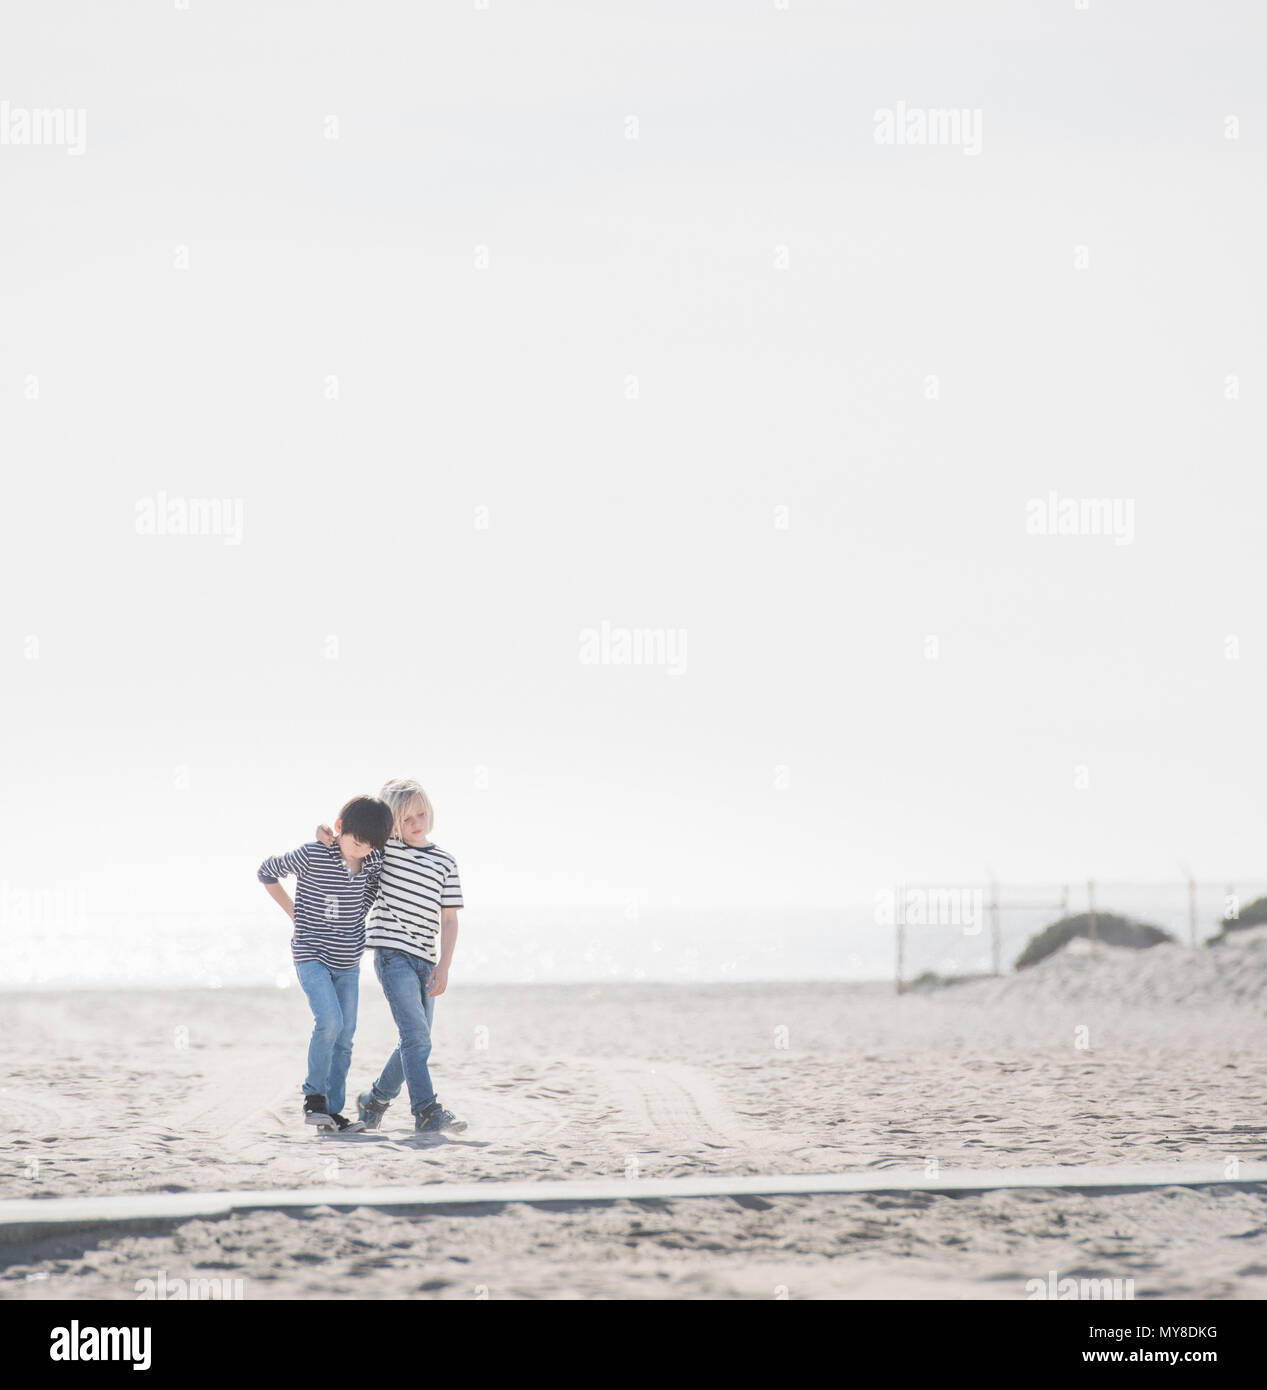 Boys walking on sandy beach Stock Photo